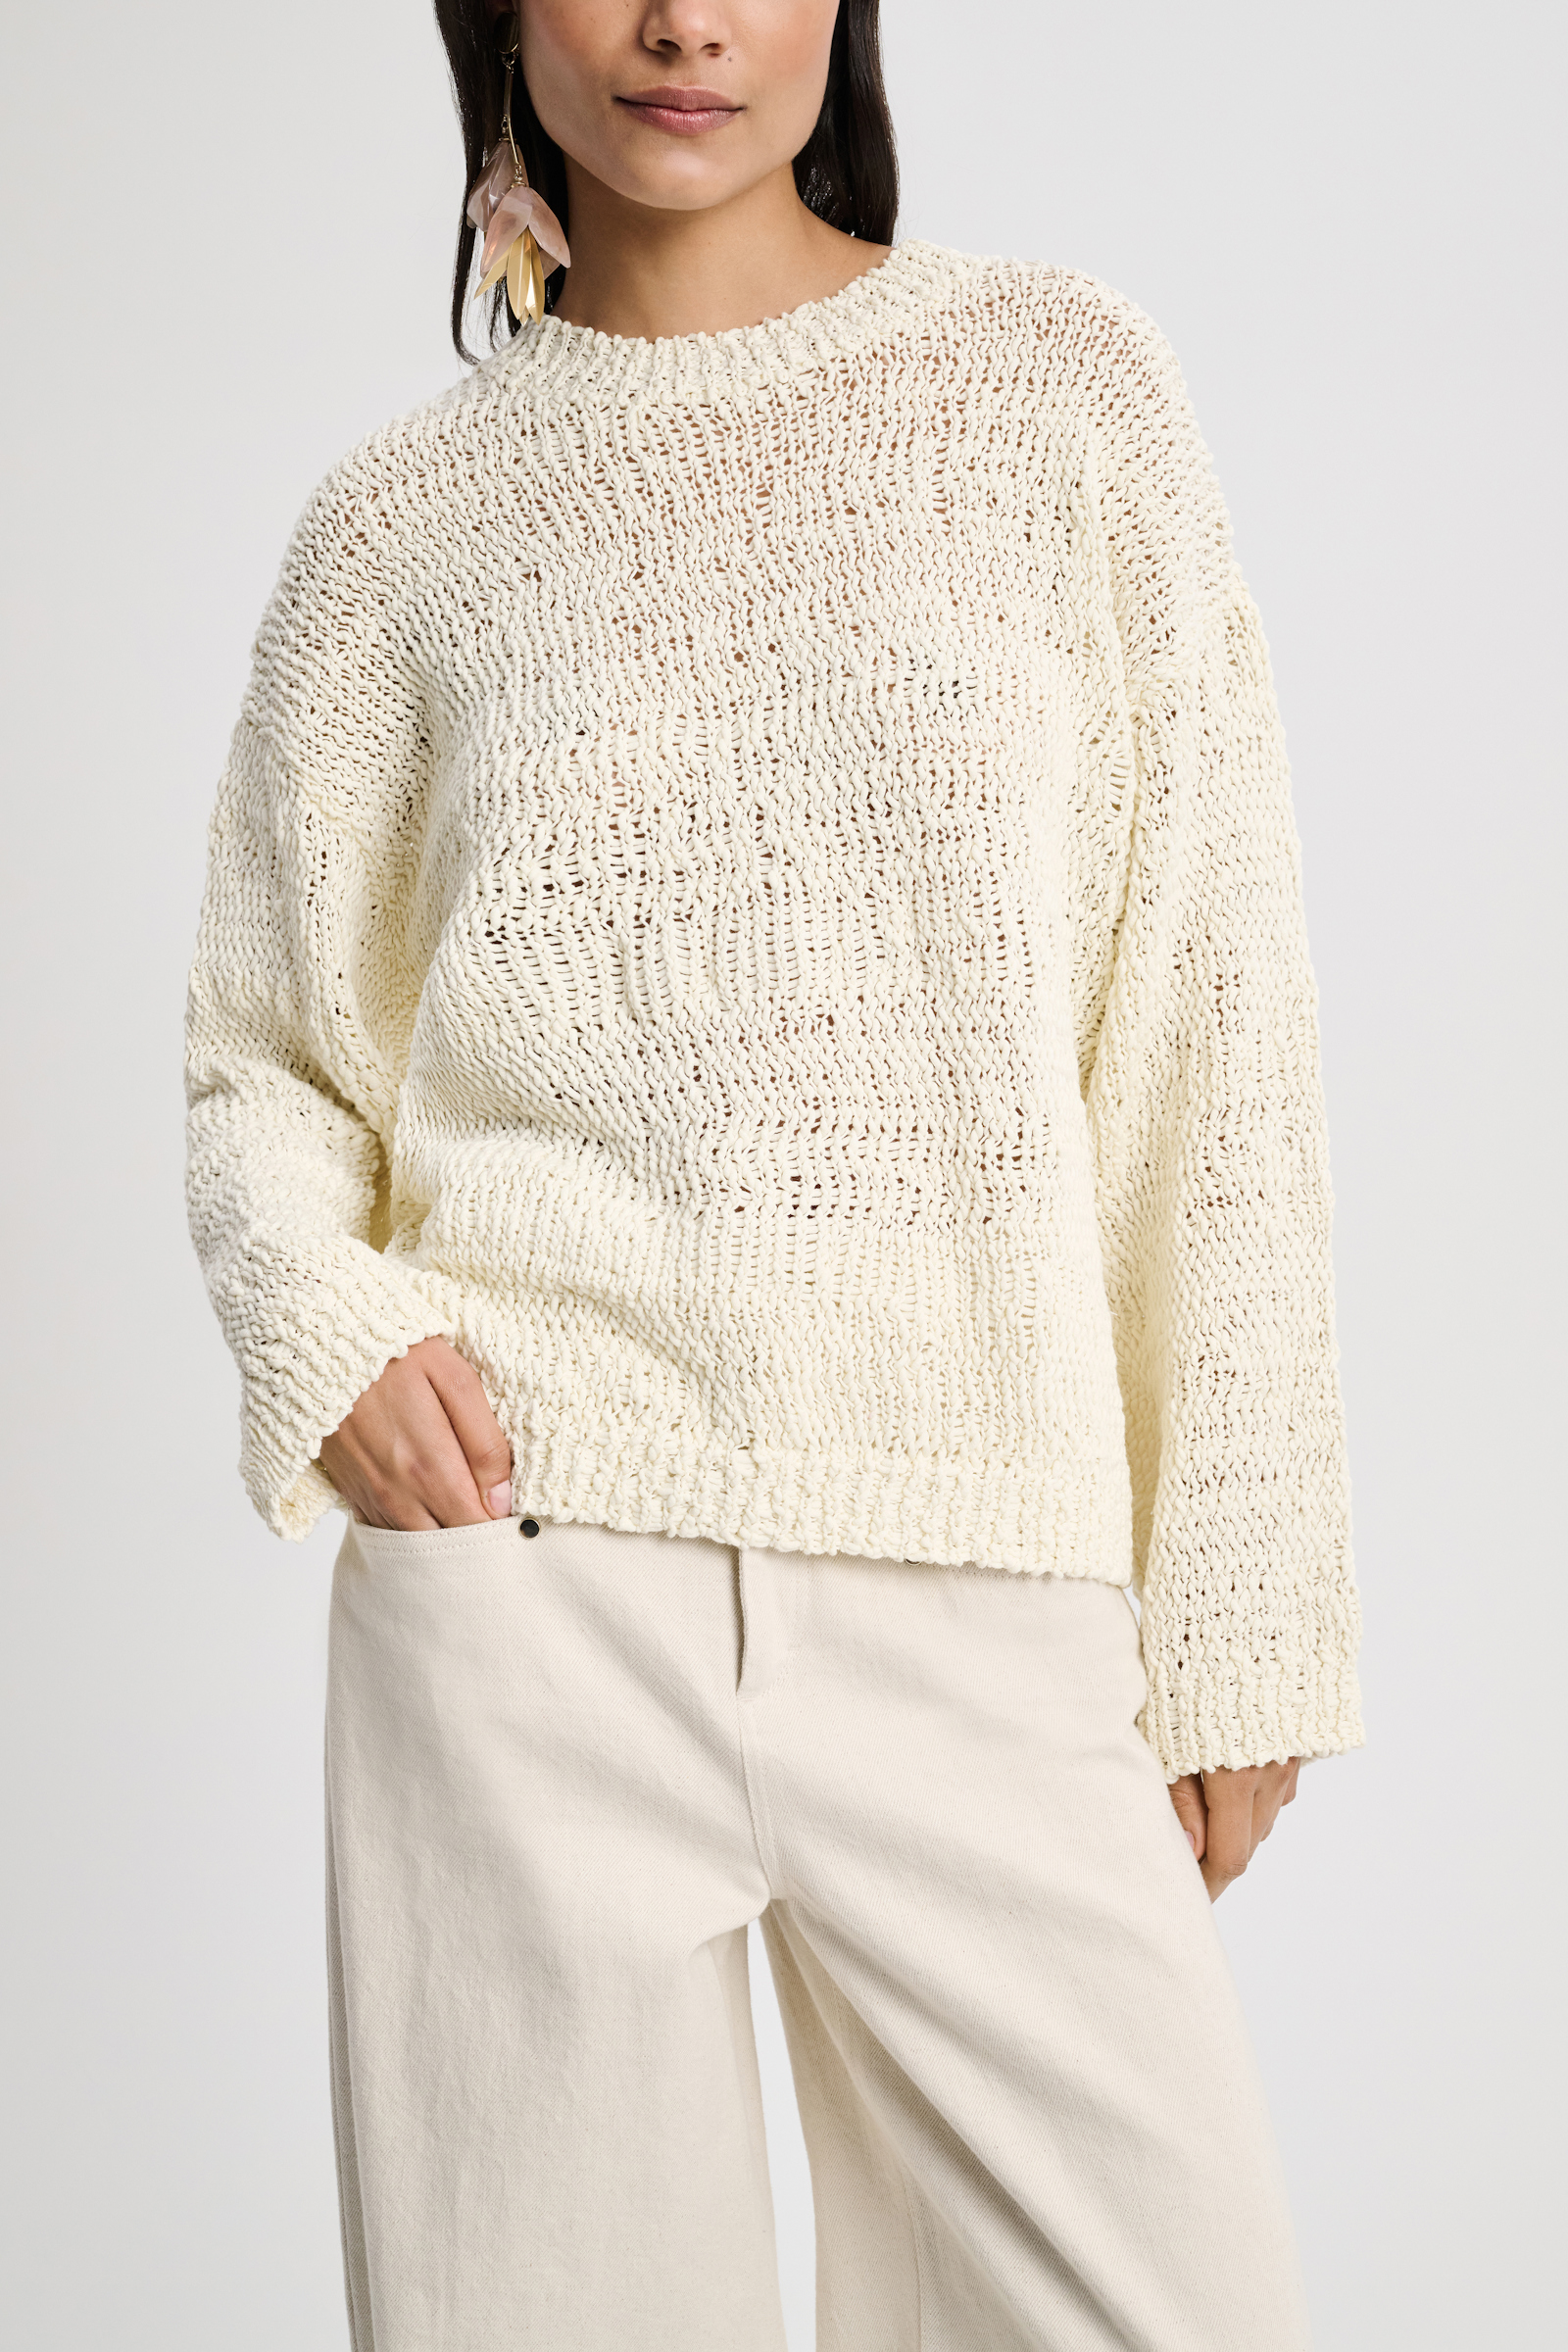 Dorothee Schumacher Textural open knit cotton pullover camellia white